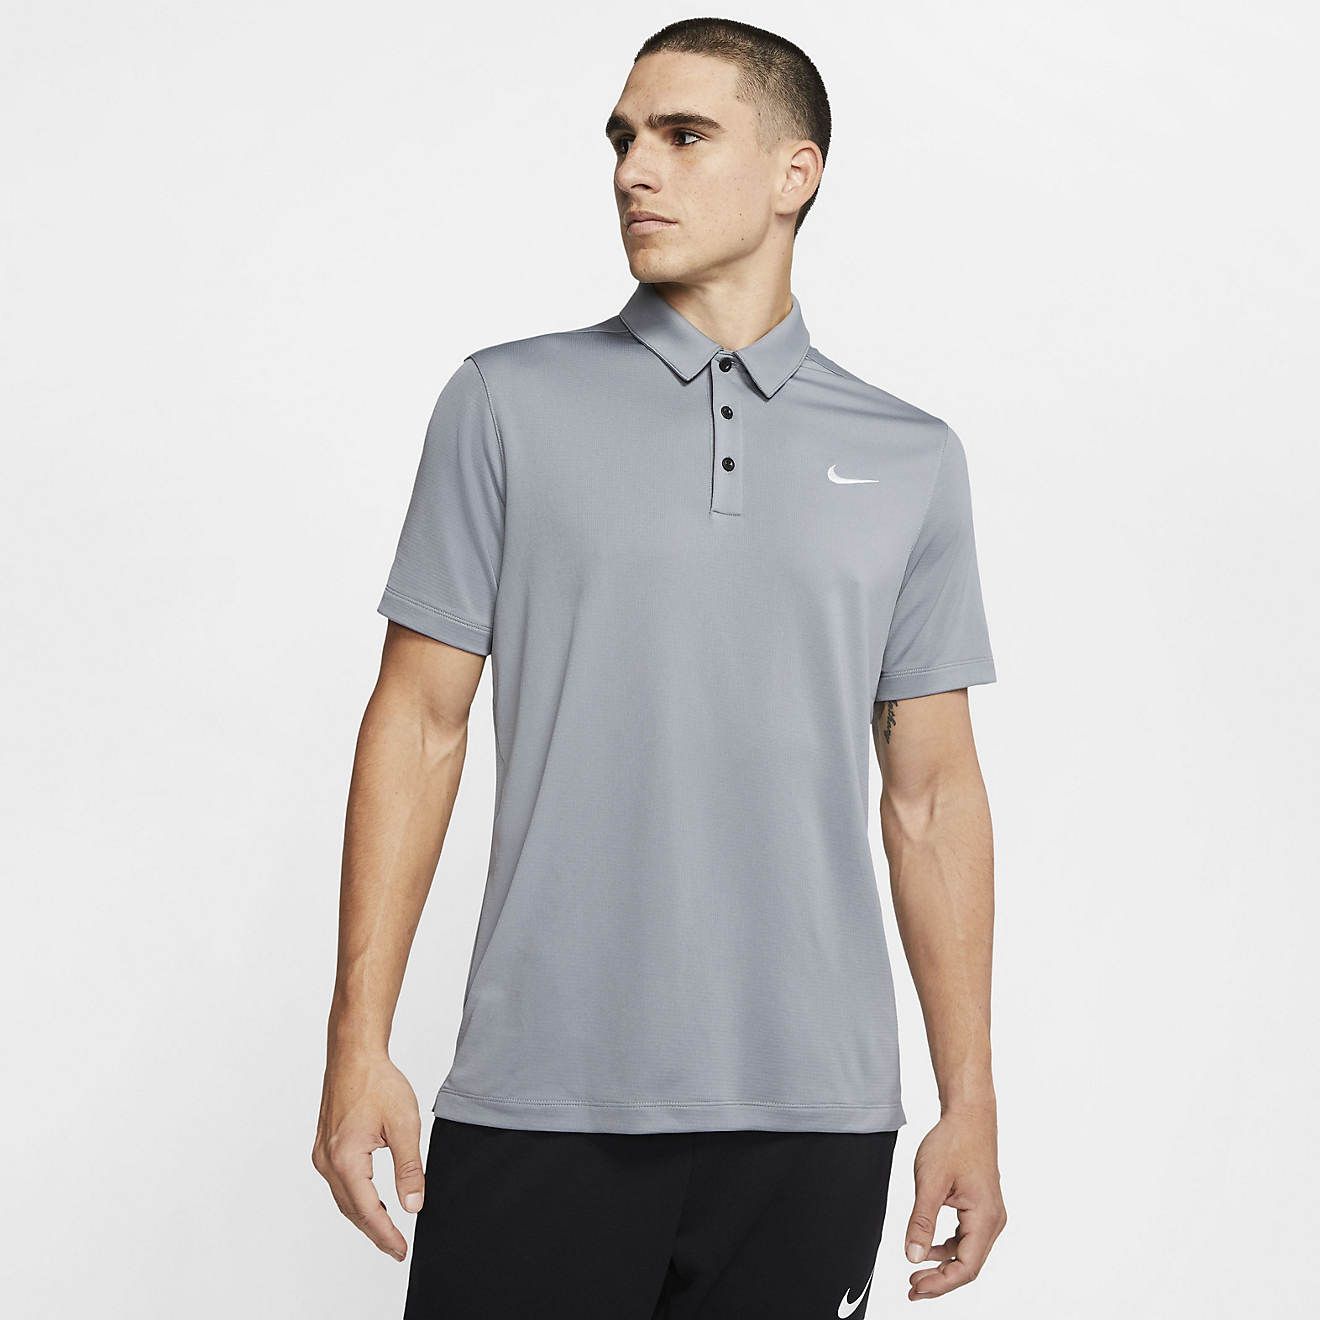 Nike Men's Dri-FIT Football Polo Shirt | Academy Sports + Outdoor Affiliate